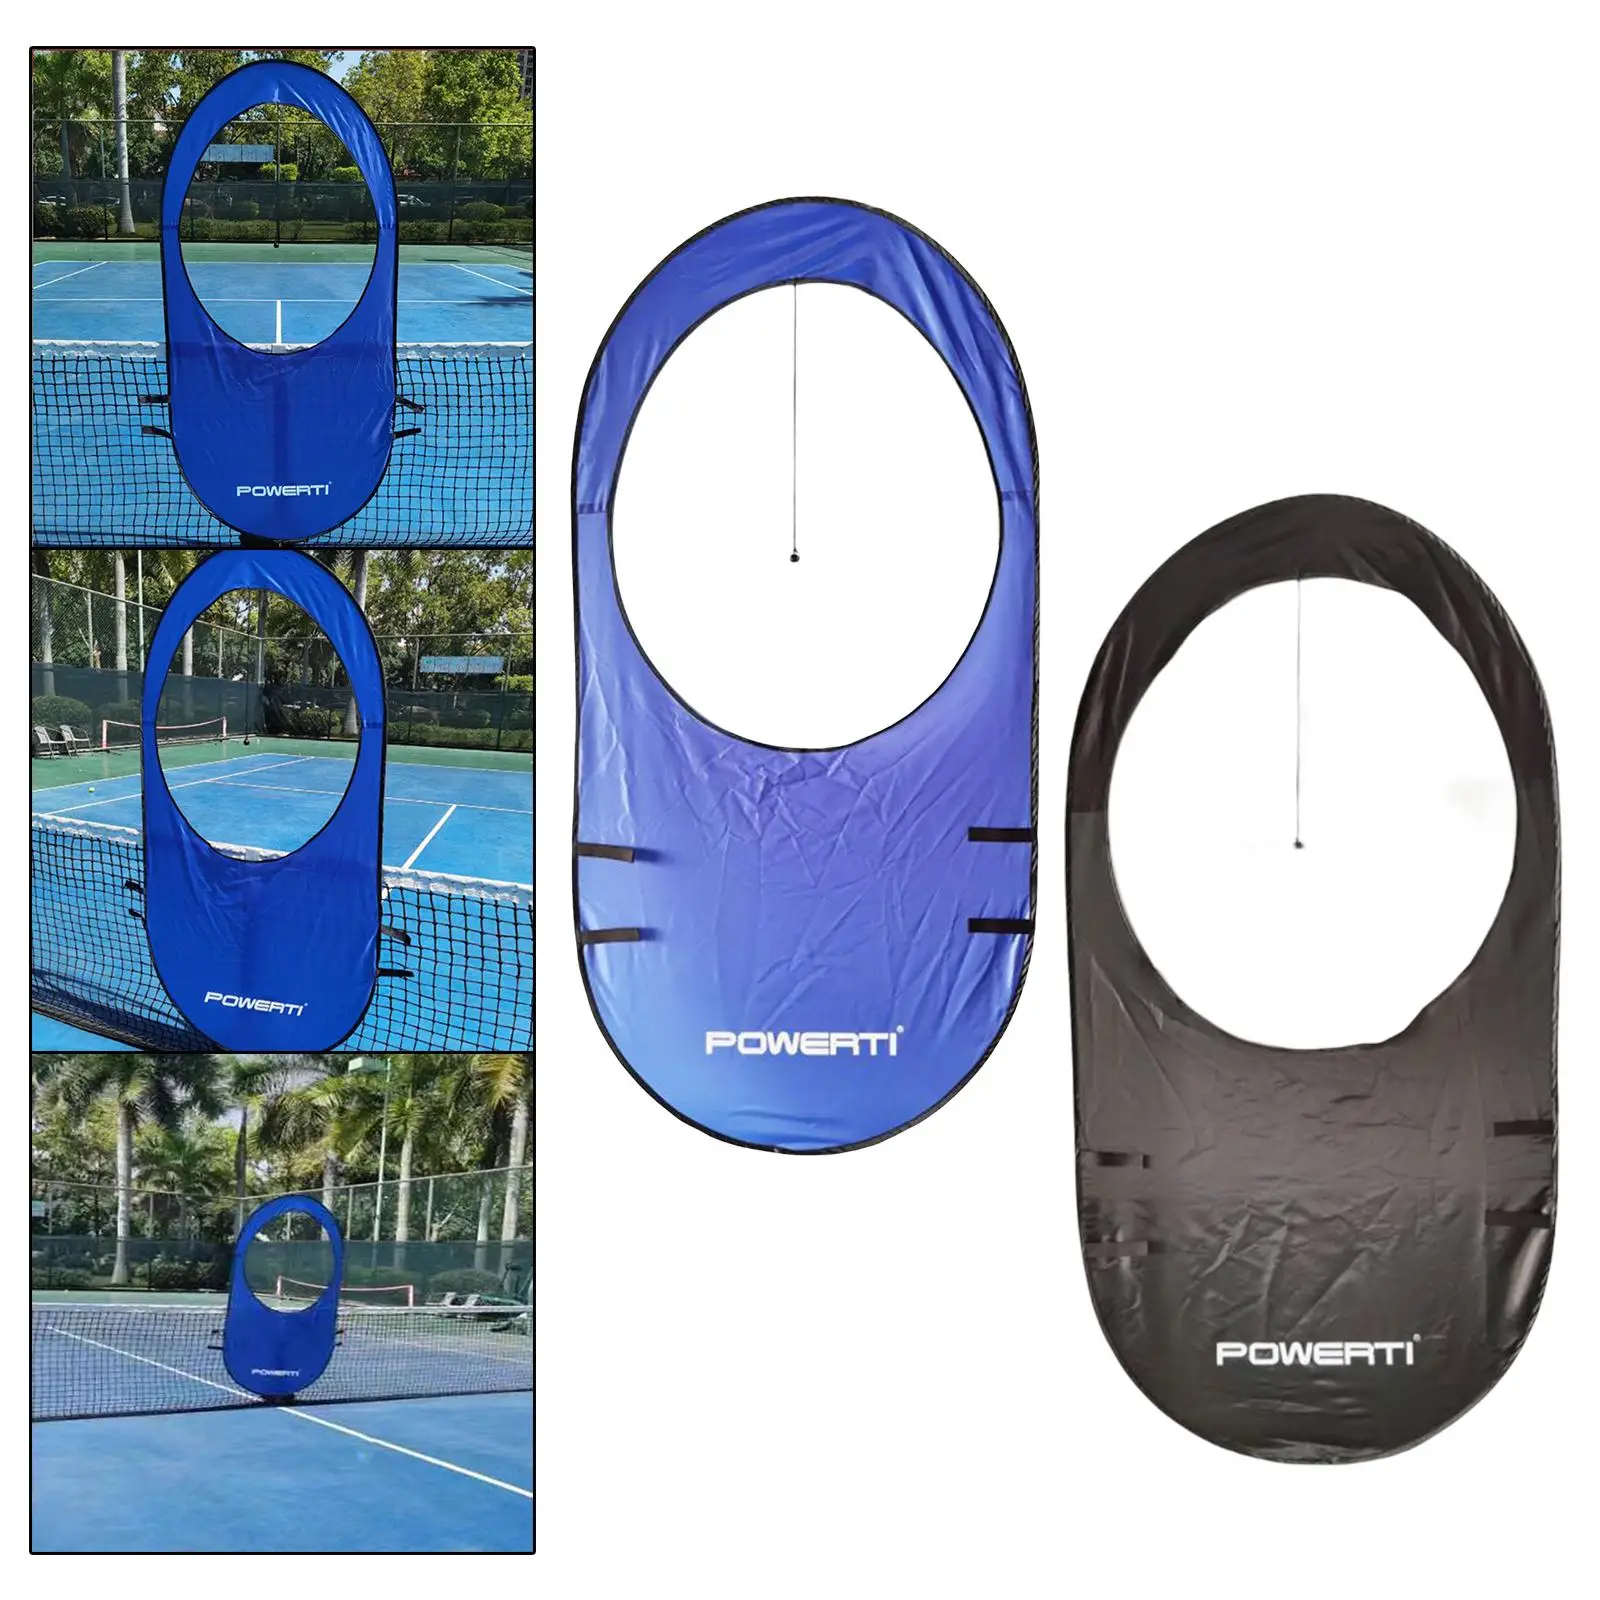 echooutdor Portable Tennis Training Target Hitting Practice Racquet Trainer